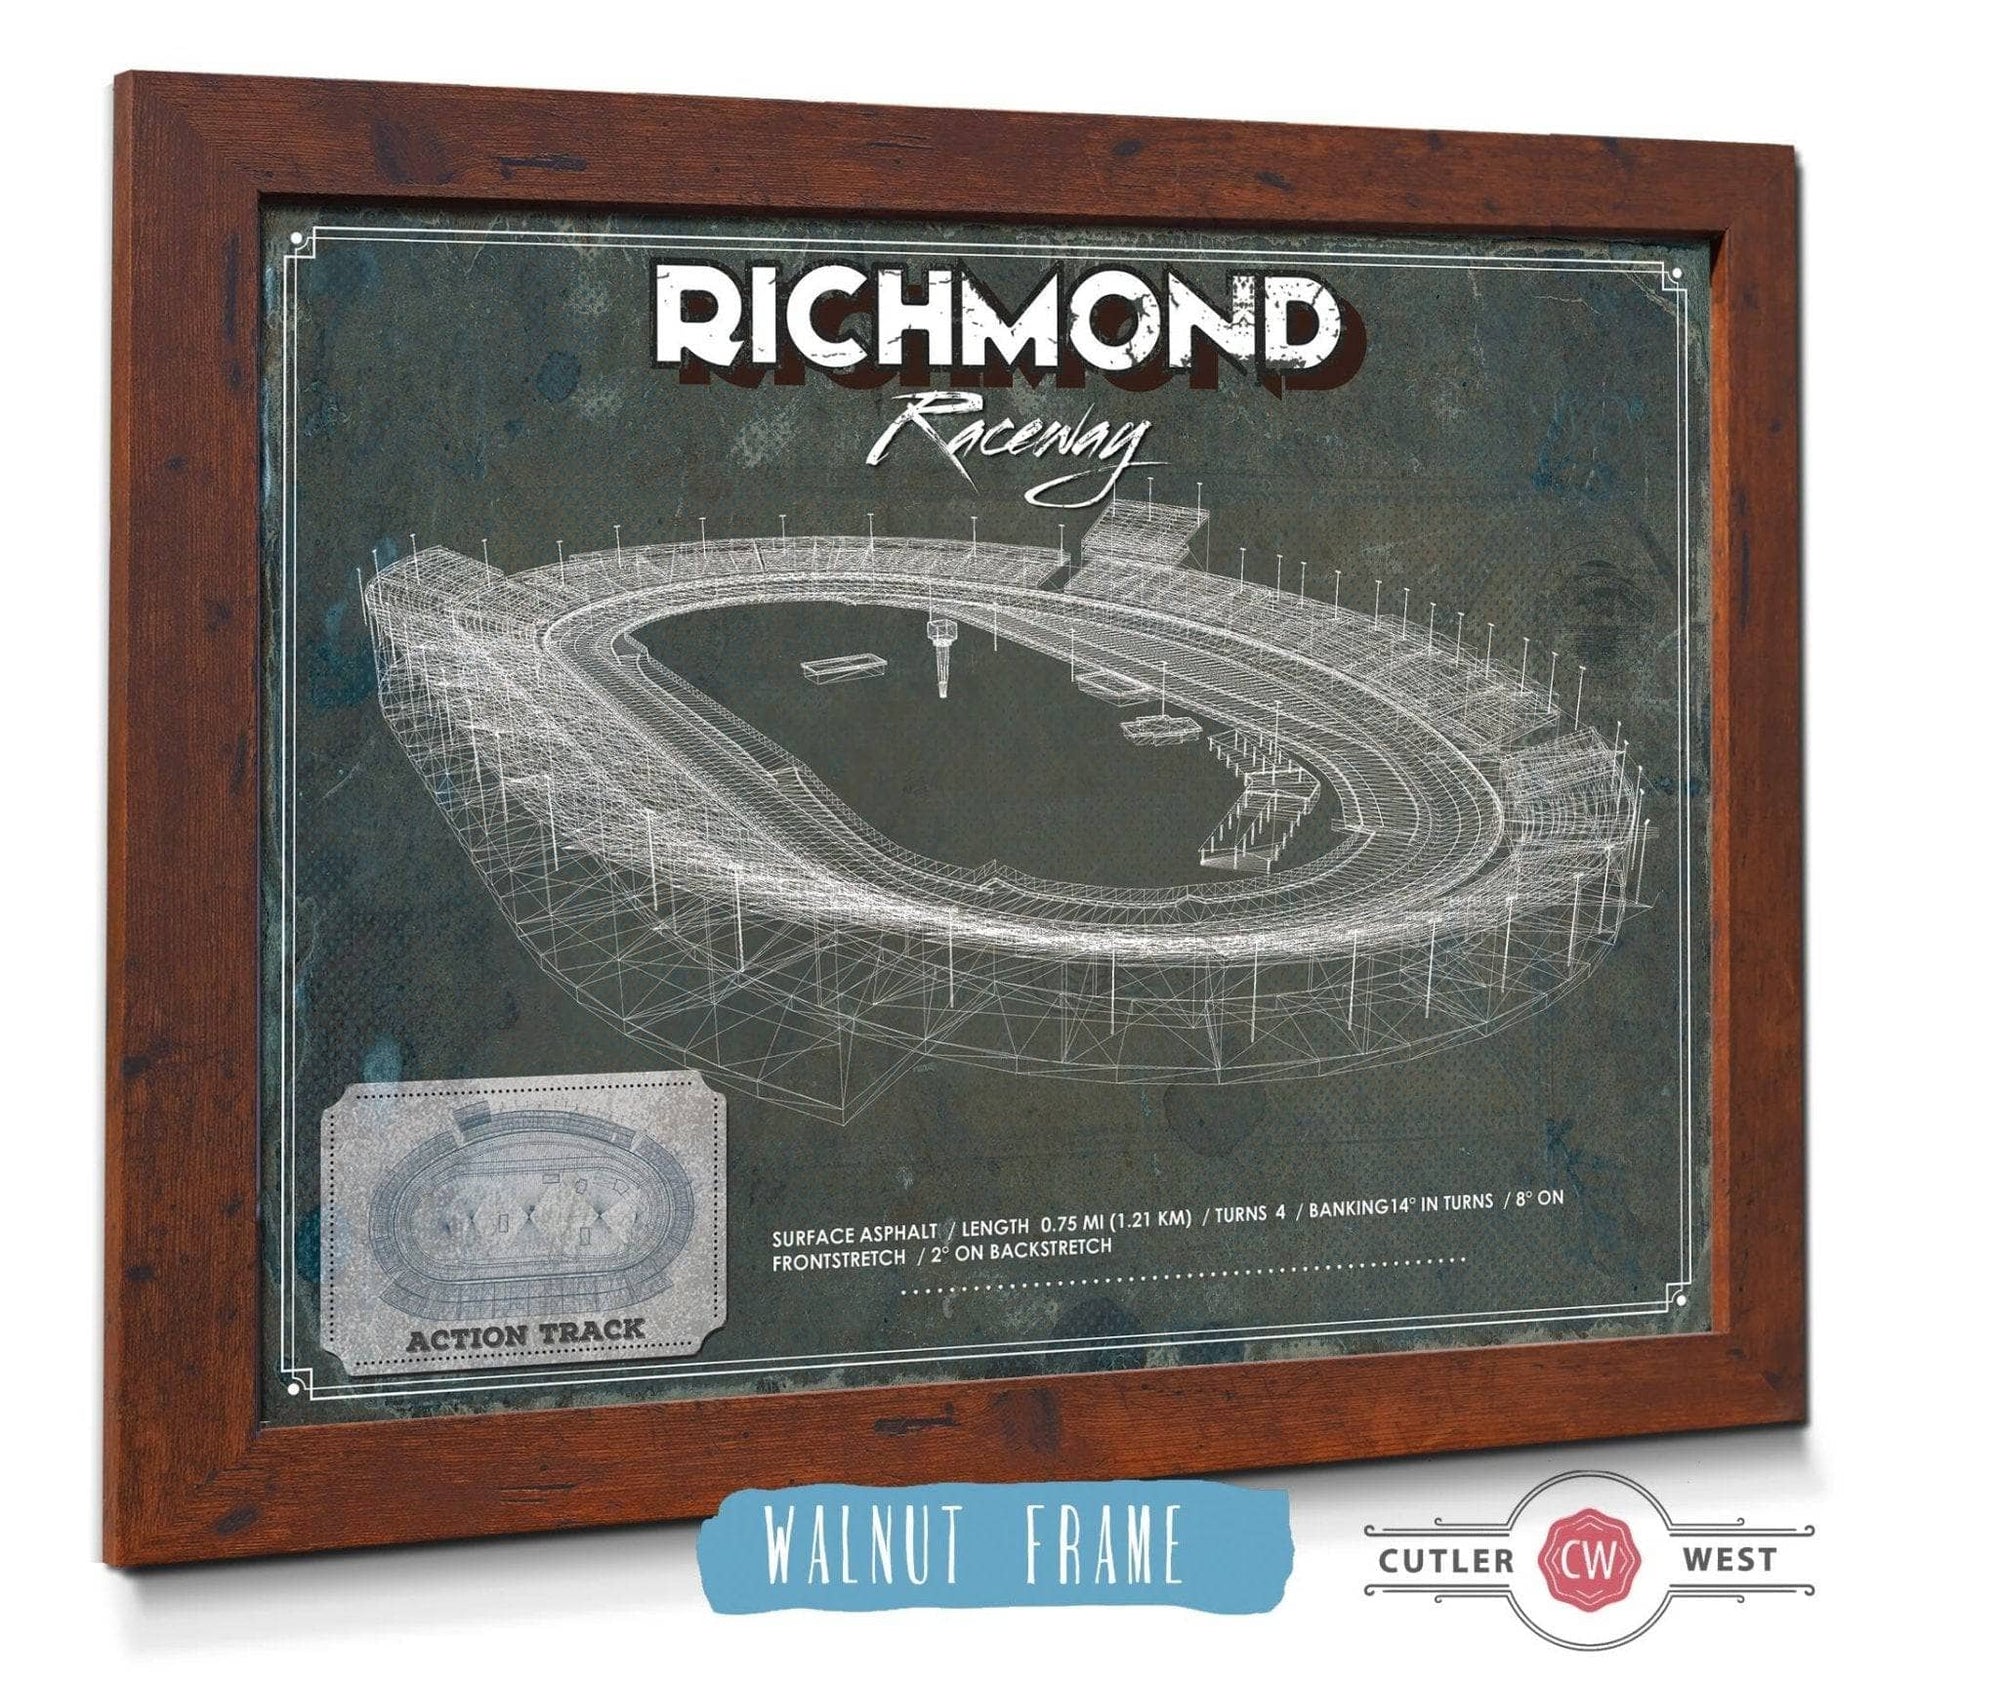 Cutler West Racetrack Collection Richmond Raceway NASCAR Race Track Print